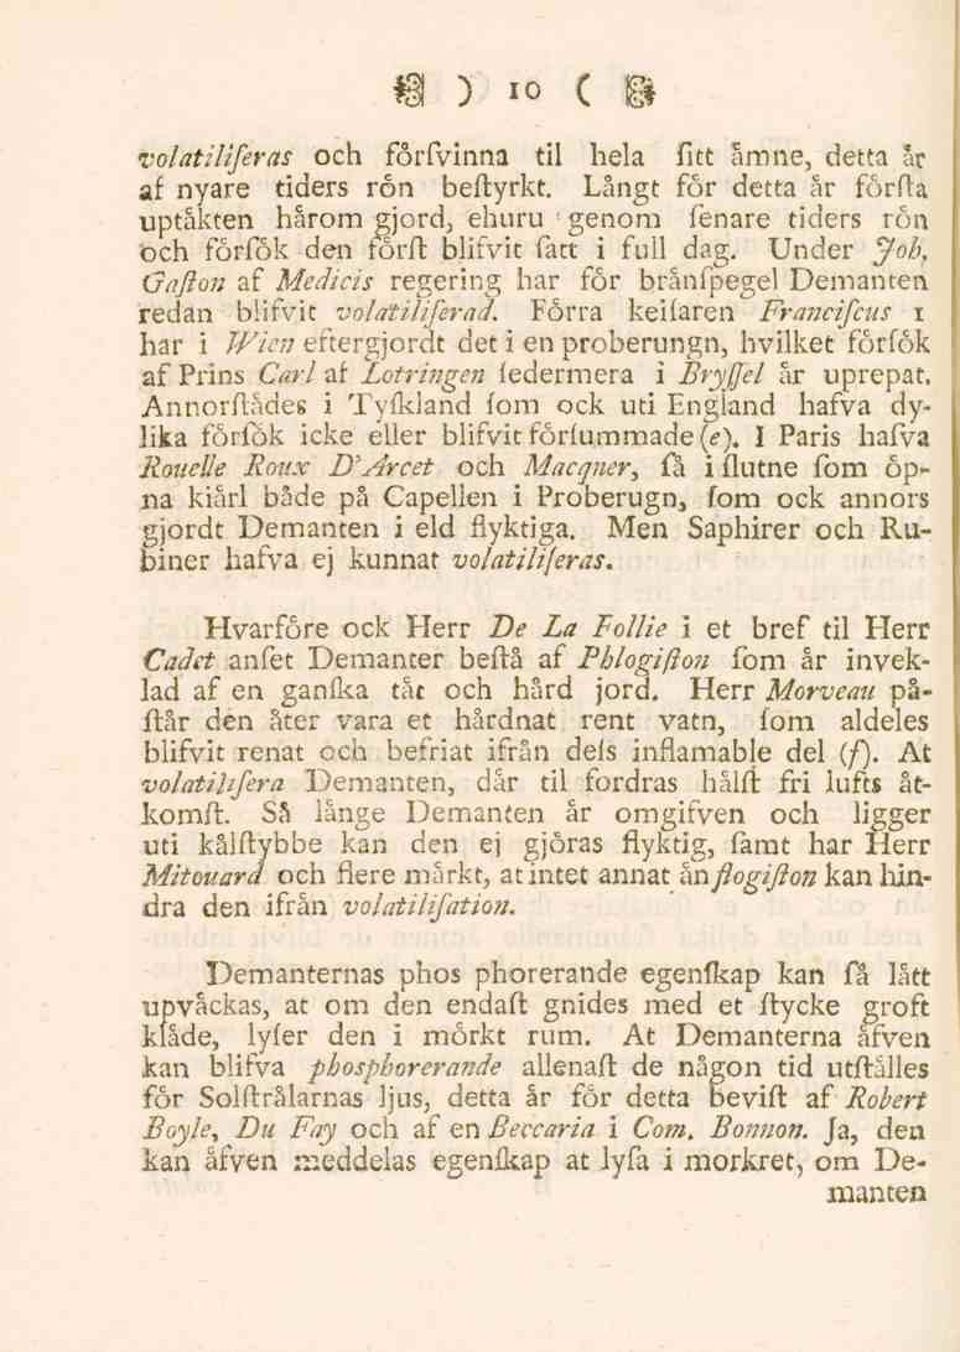 redan blifvit volatiliferad. Förra keifaren Francifcus i har i Wien eftergjordt det i en proberungn, hvilket förfök af Prins Carl af Lotringen federmera i Bryfjel år uprepat.